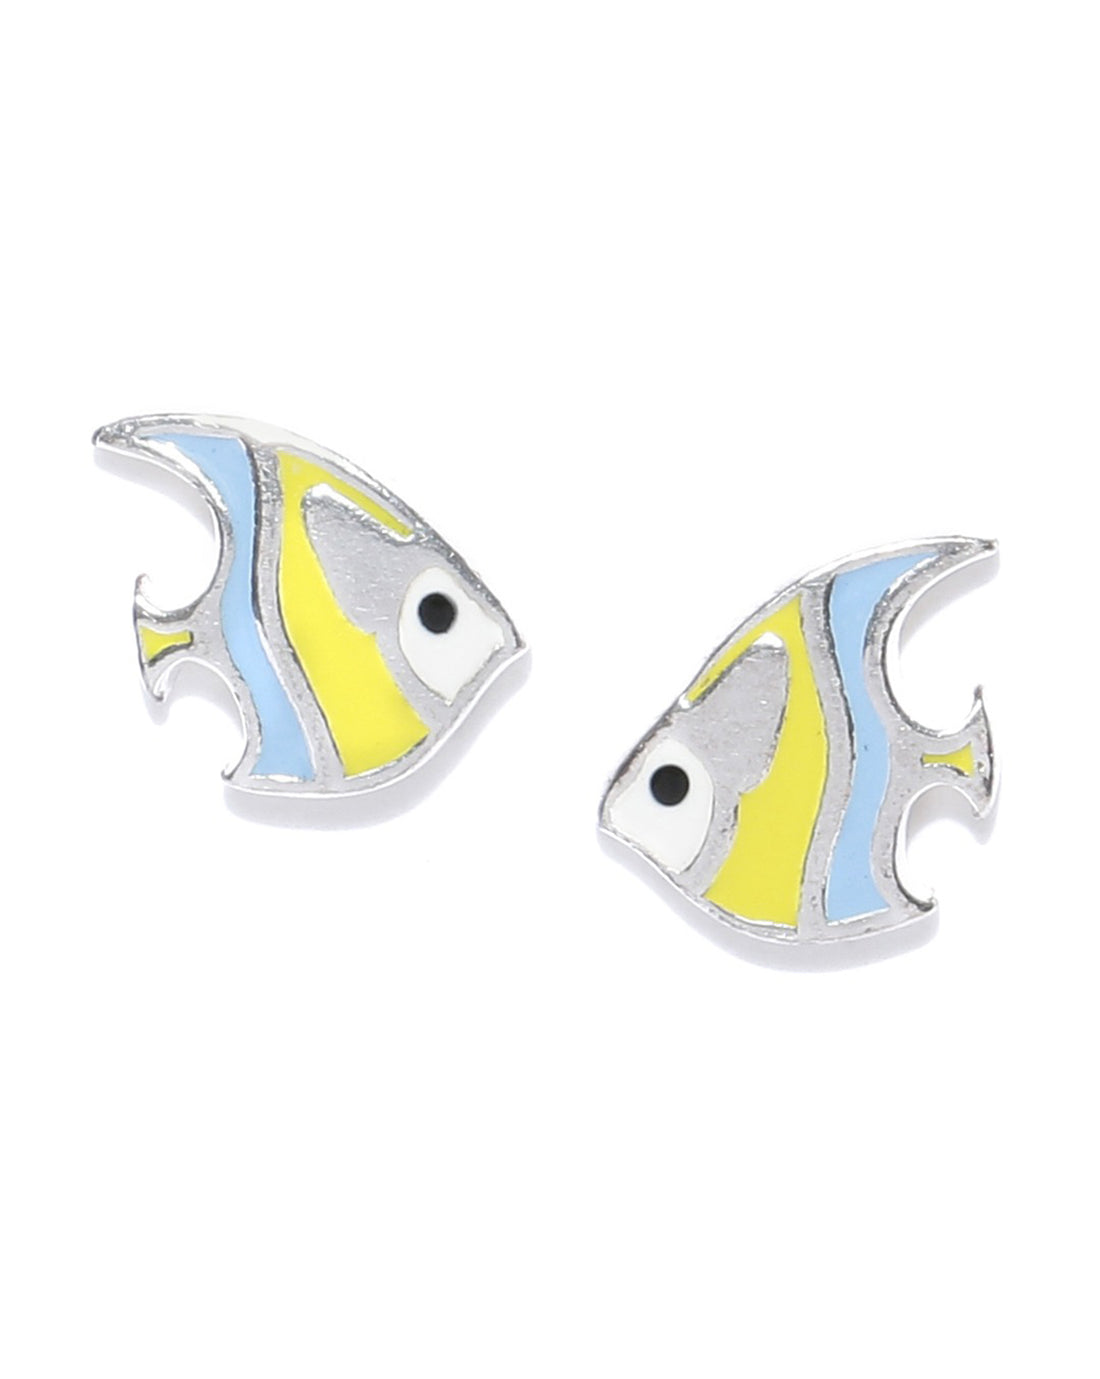 Carlton London 925 Sterling Silver Rhodium Plated Enamel Fish Stud Earring For Girl